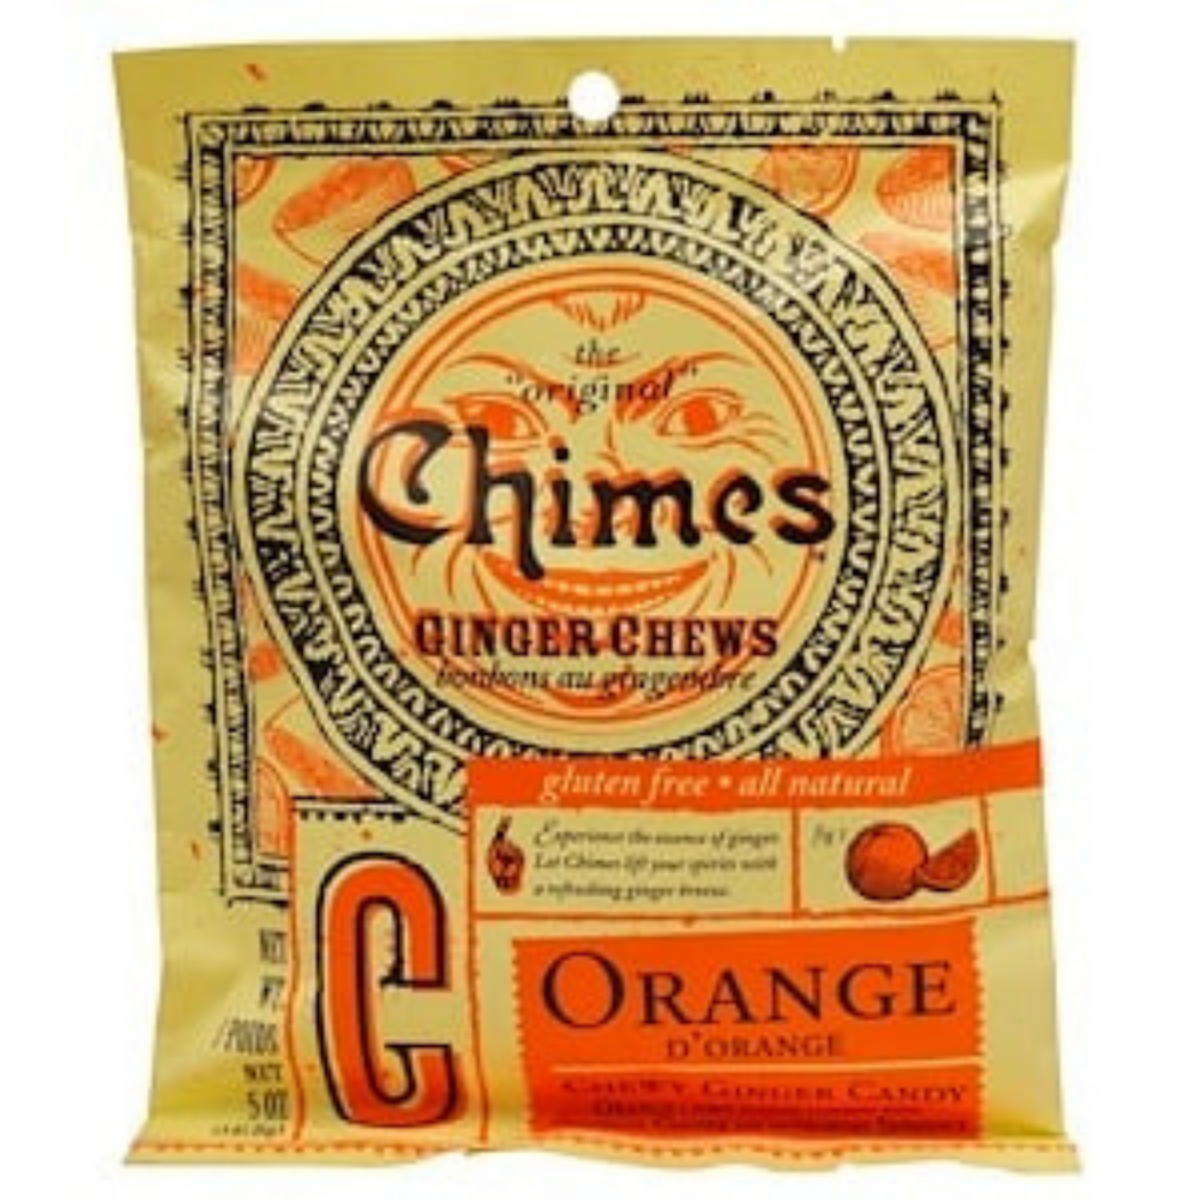 Primary Image of Orange Ginger Chews